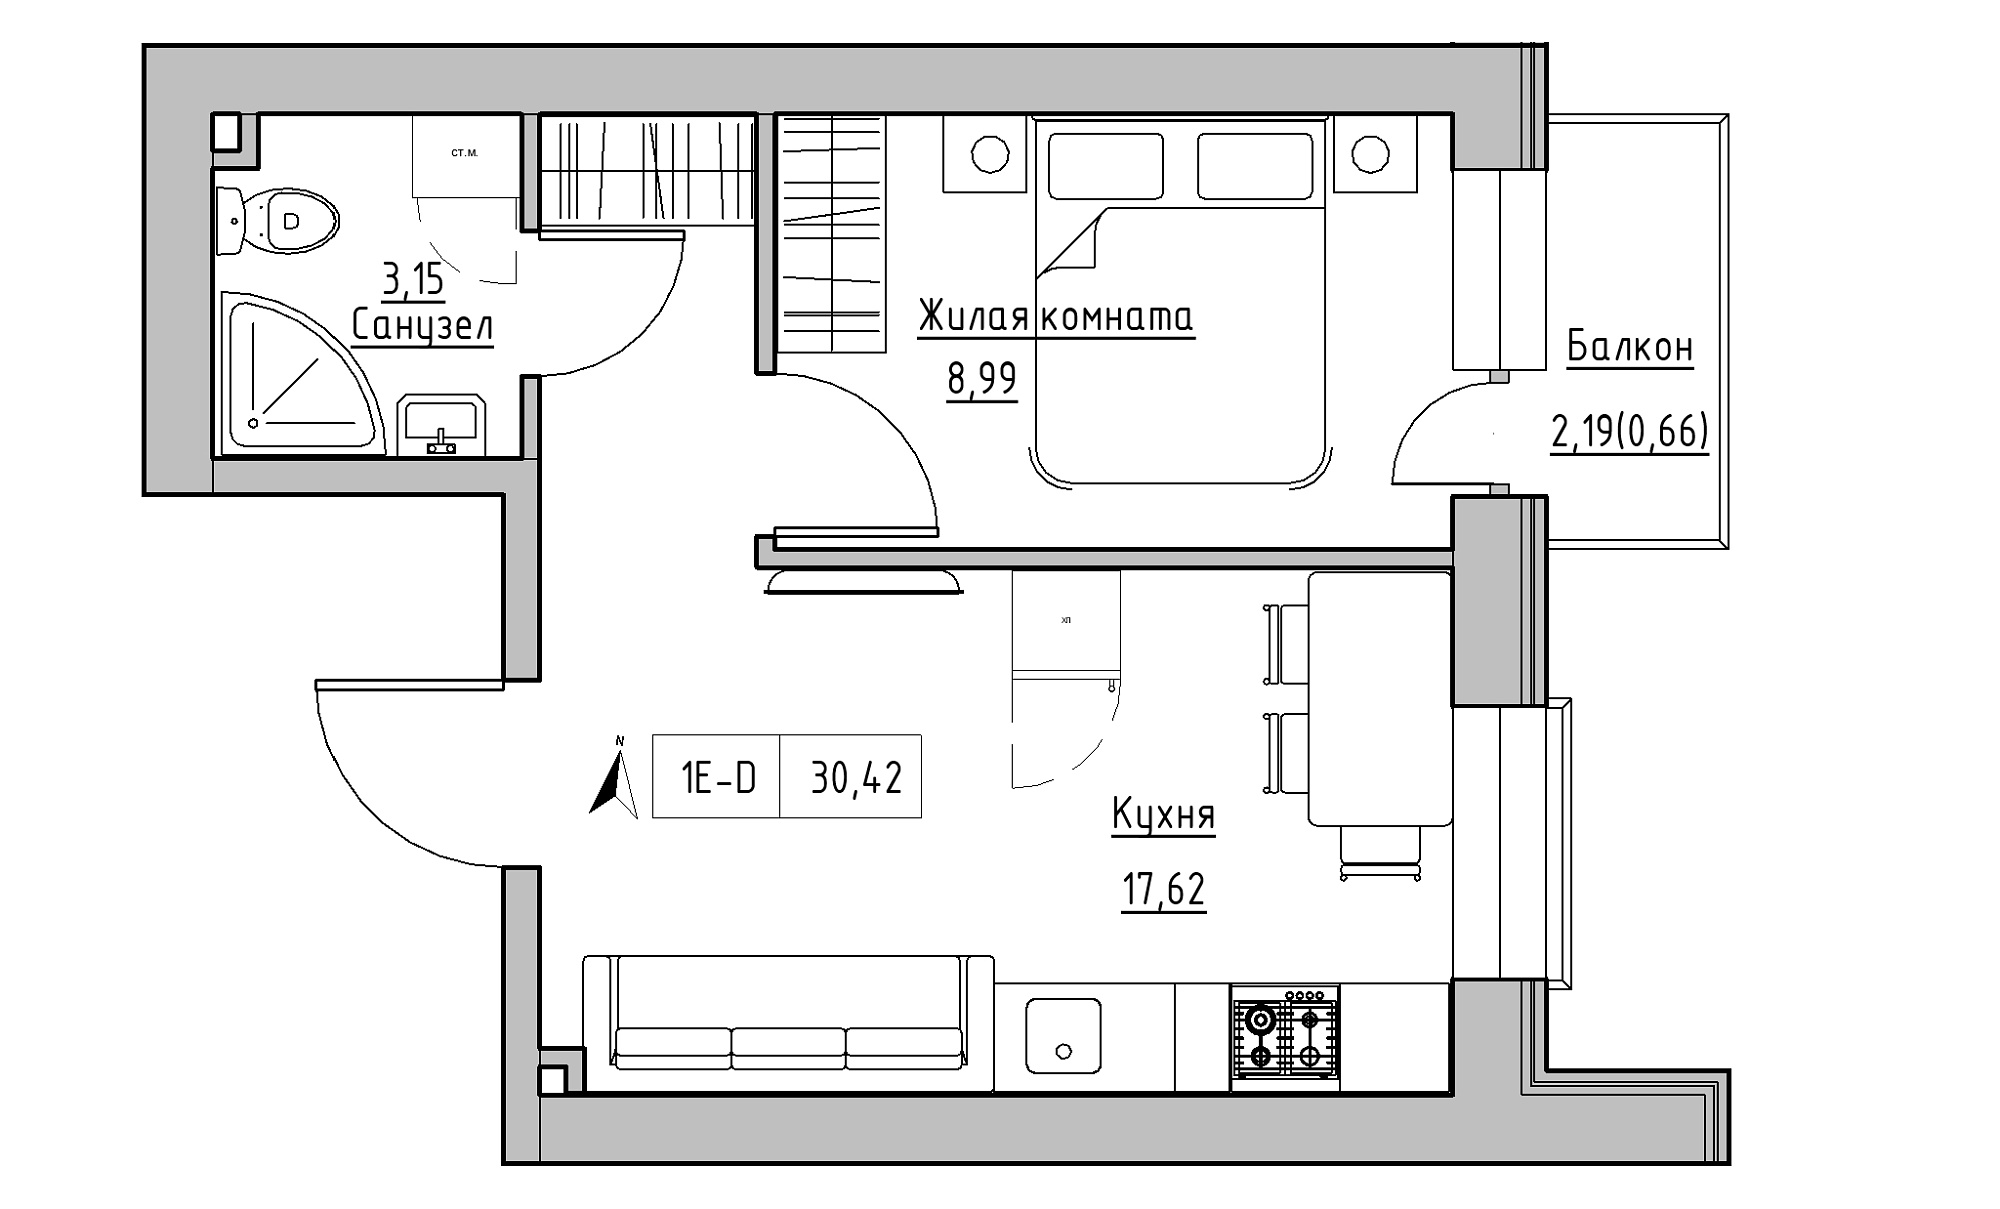 Planning 1-rm flats area 30.42m2, KS-016-04/0013.